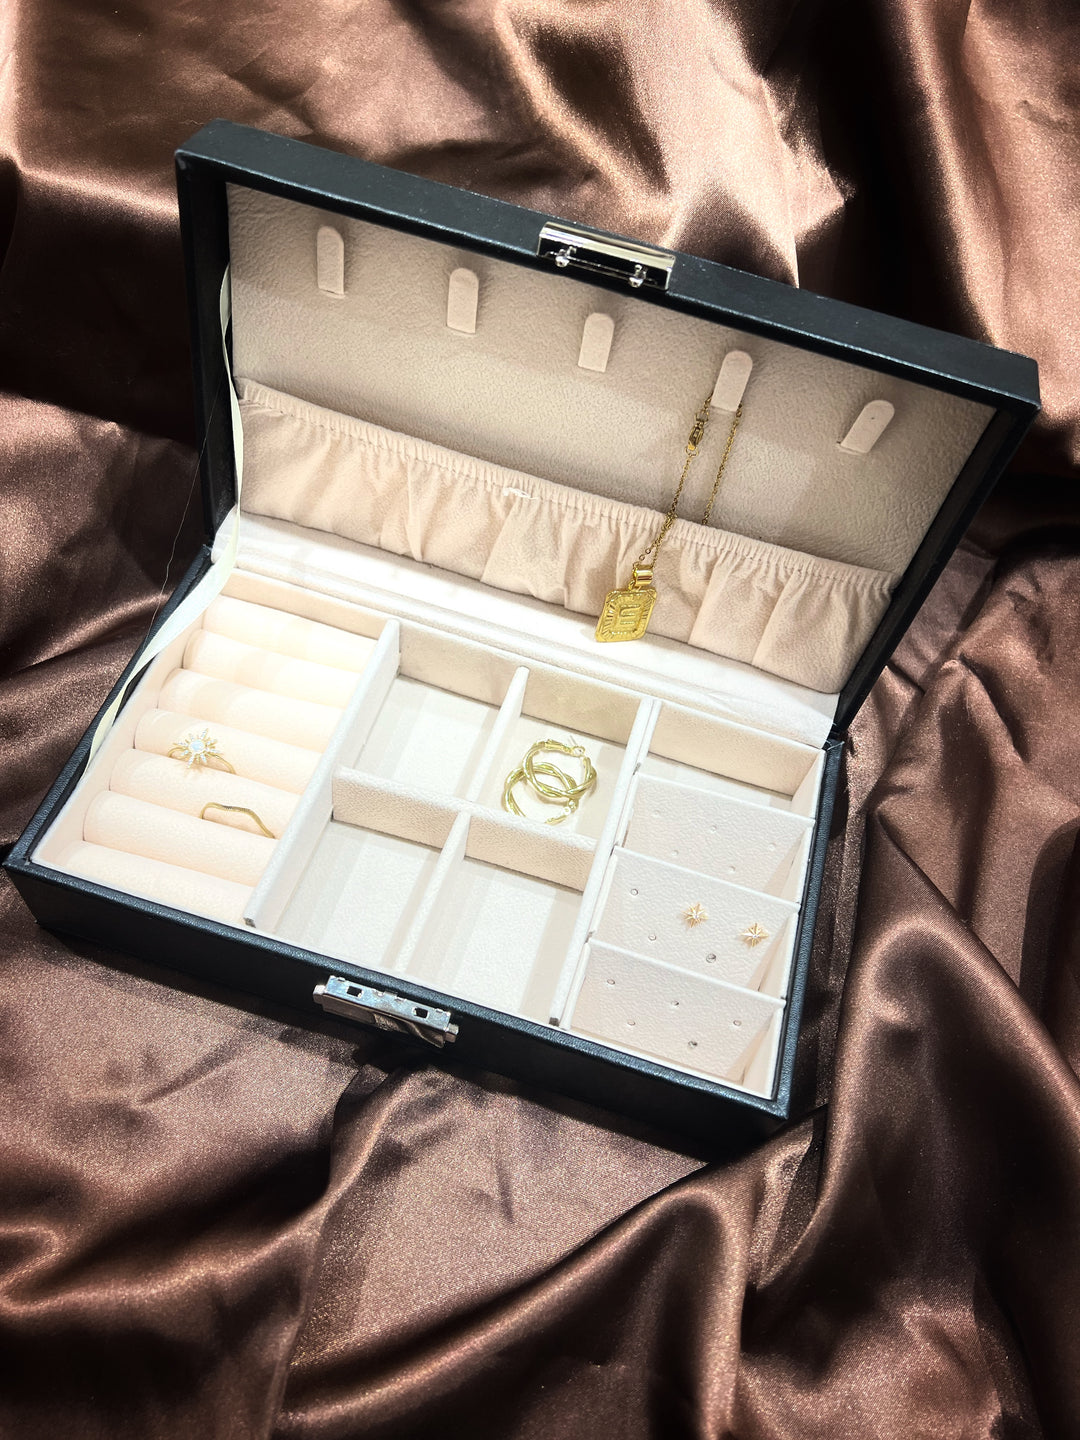 Belle Jewelry Box